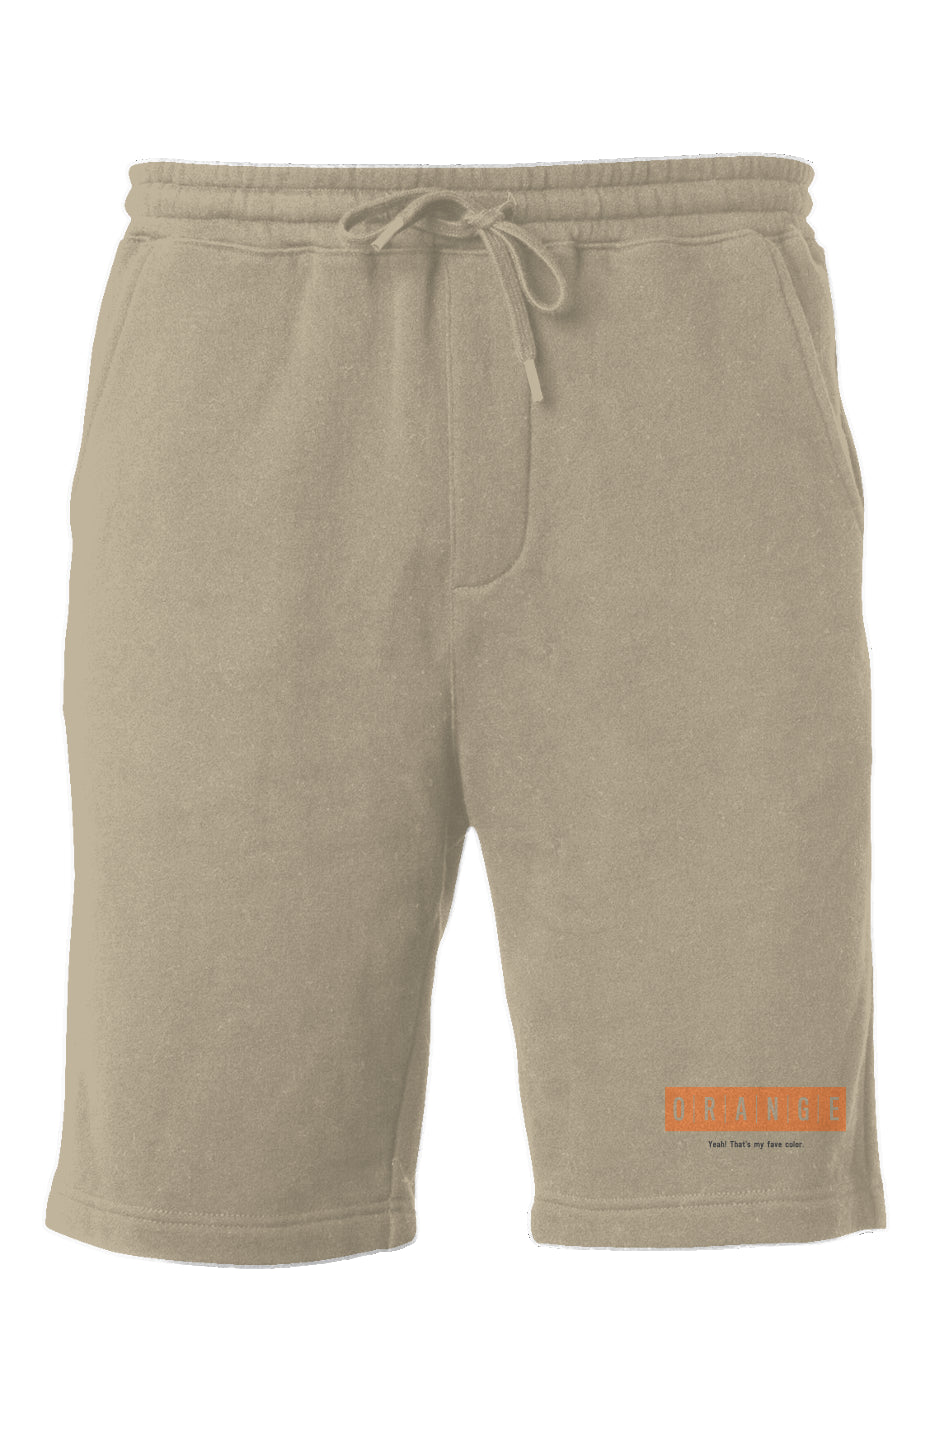 Orange Collection Midweight Fleece Shorts